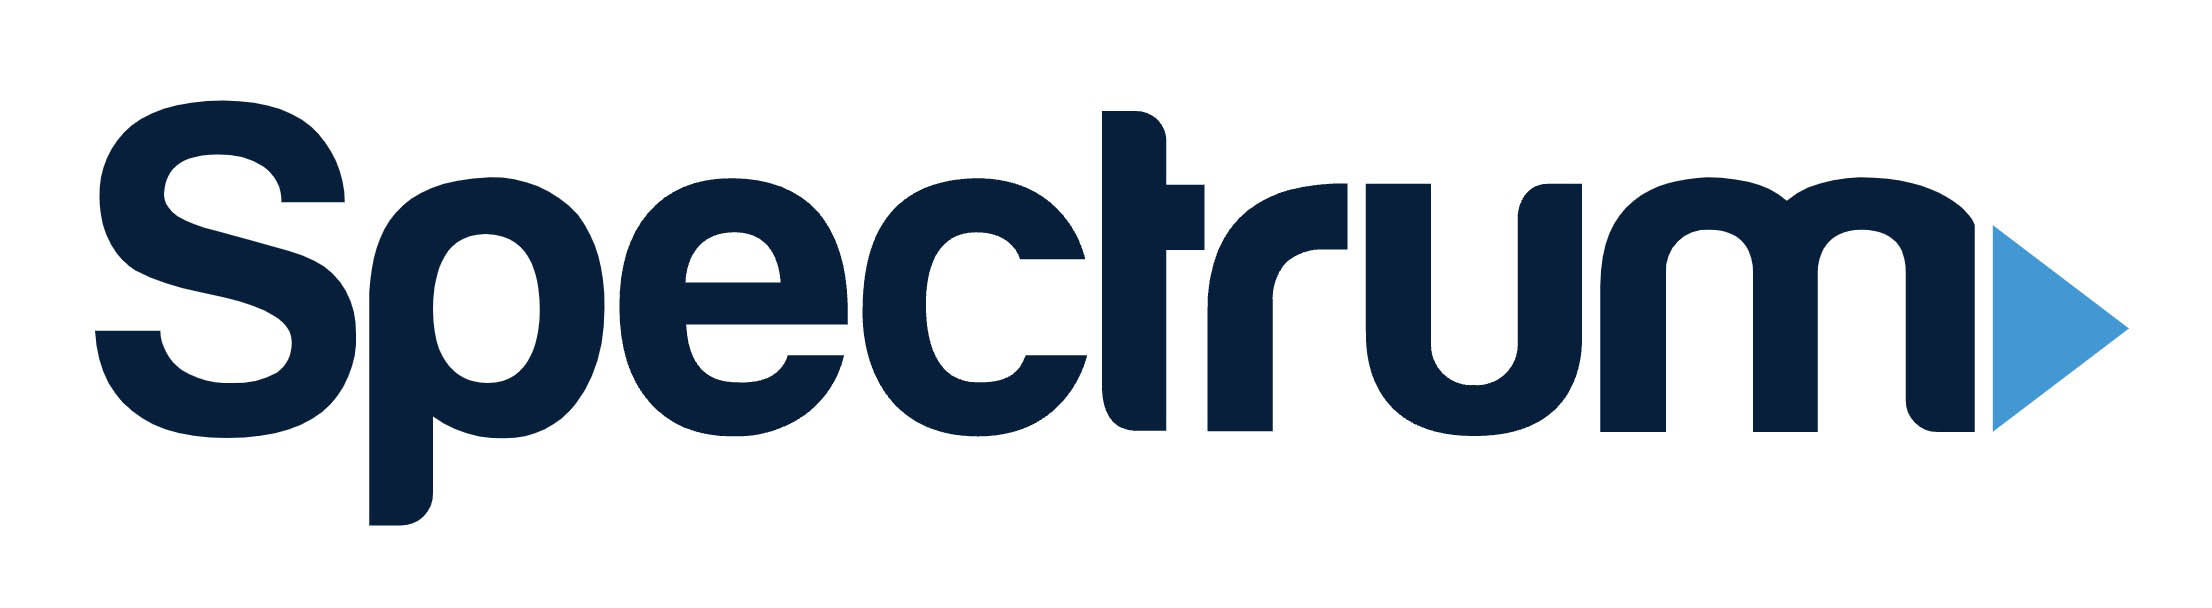 Spectrum logo lrg